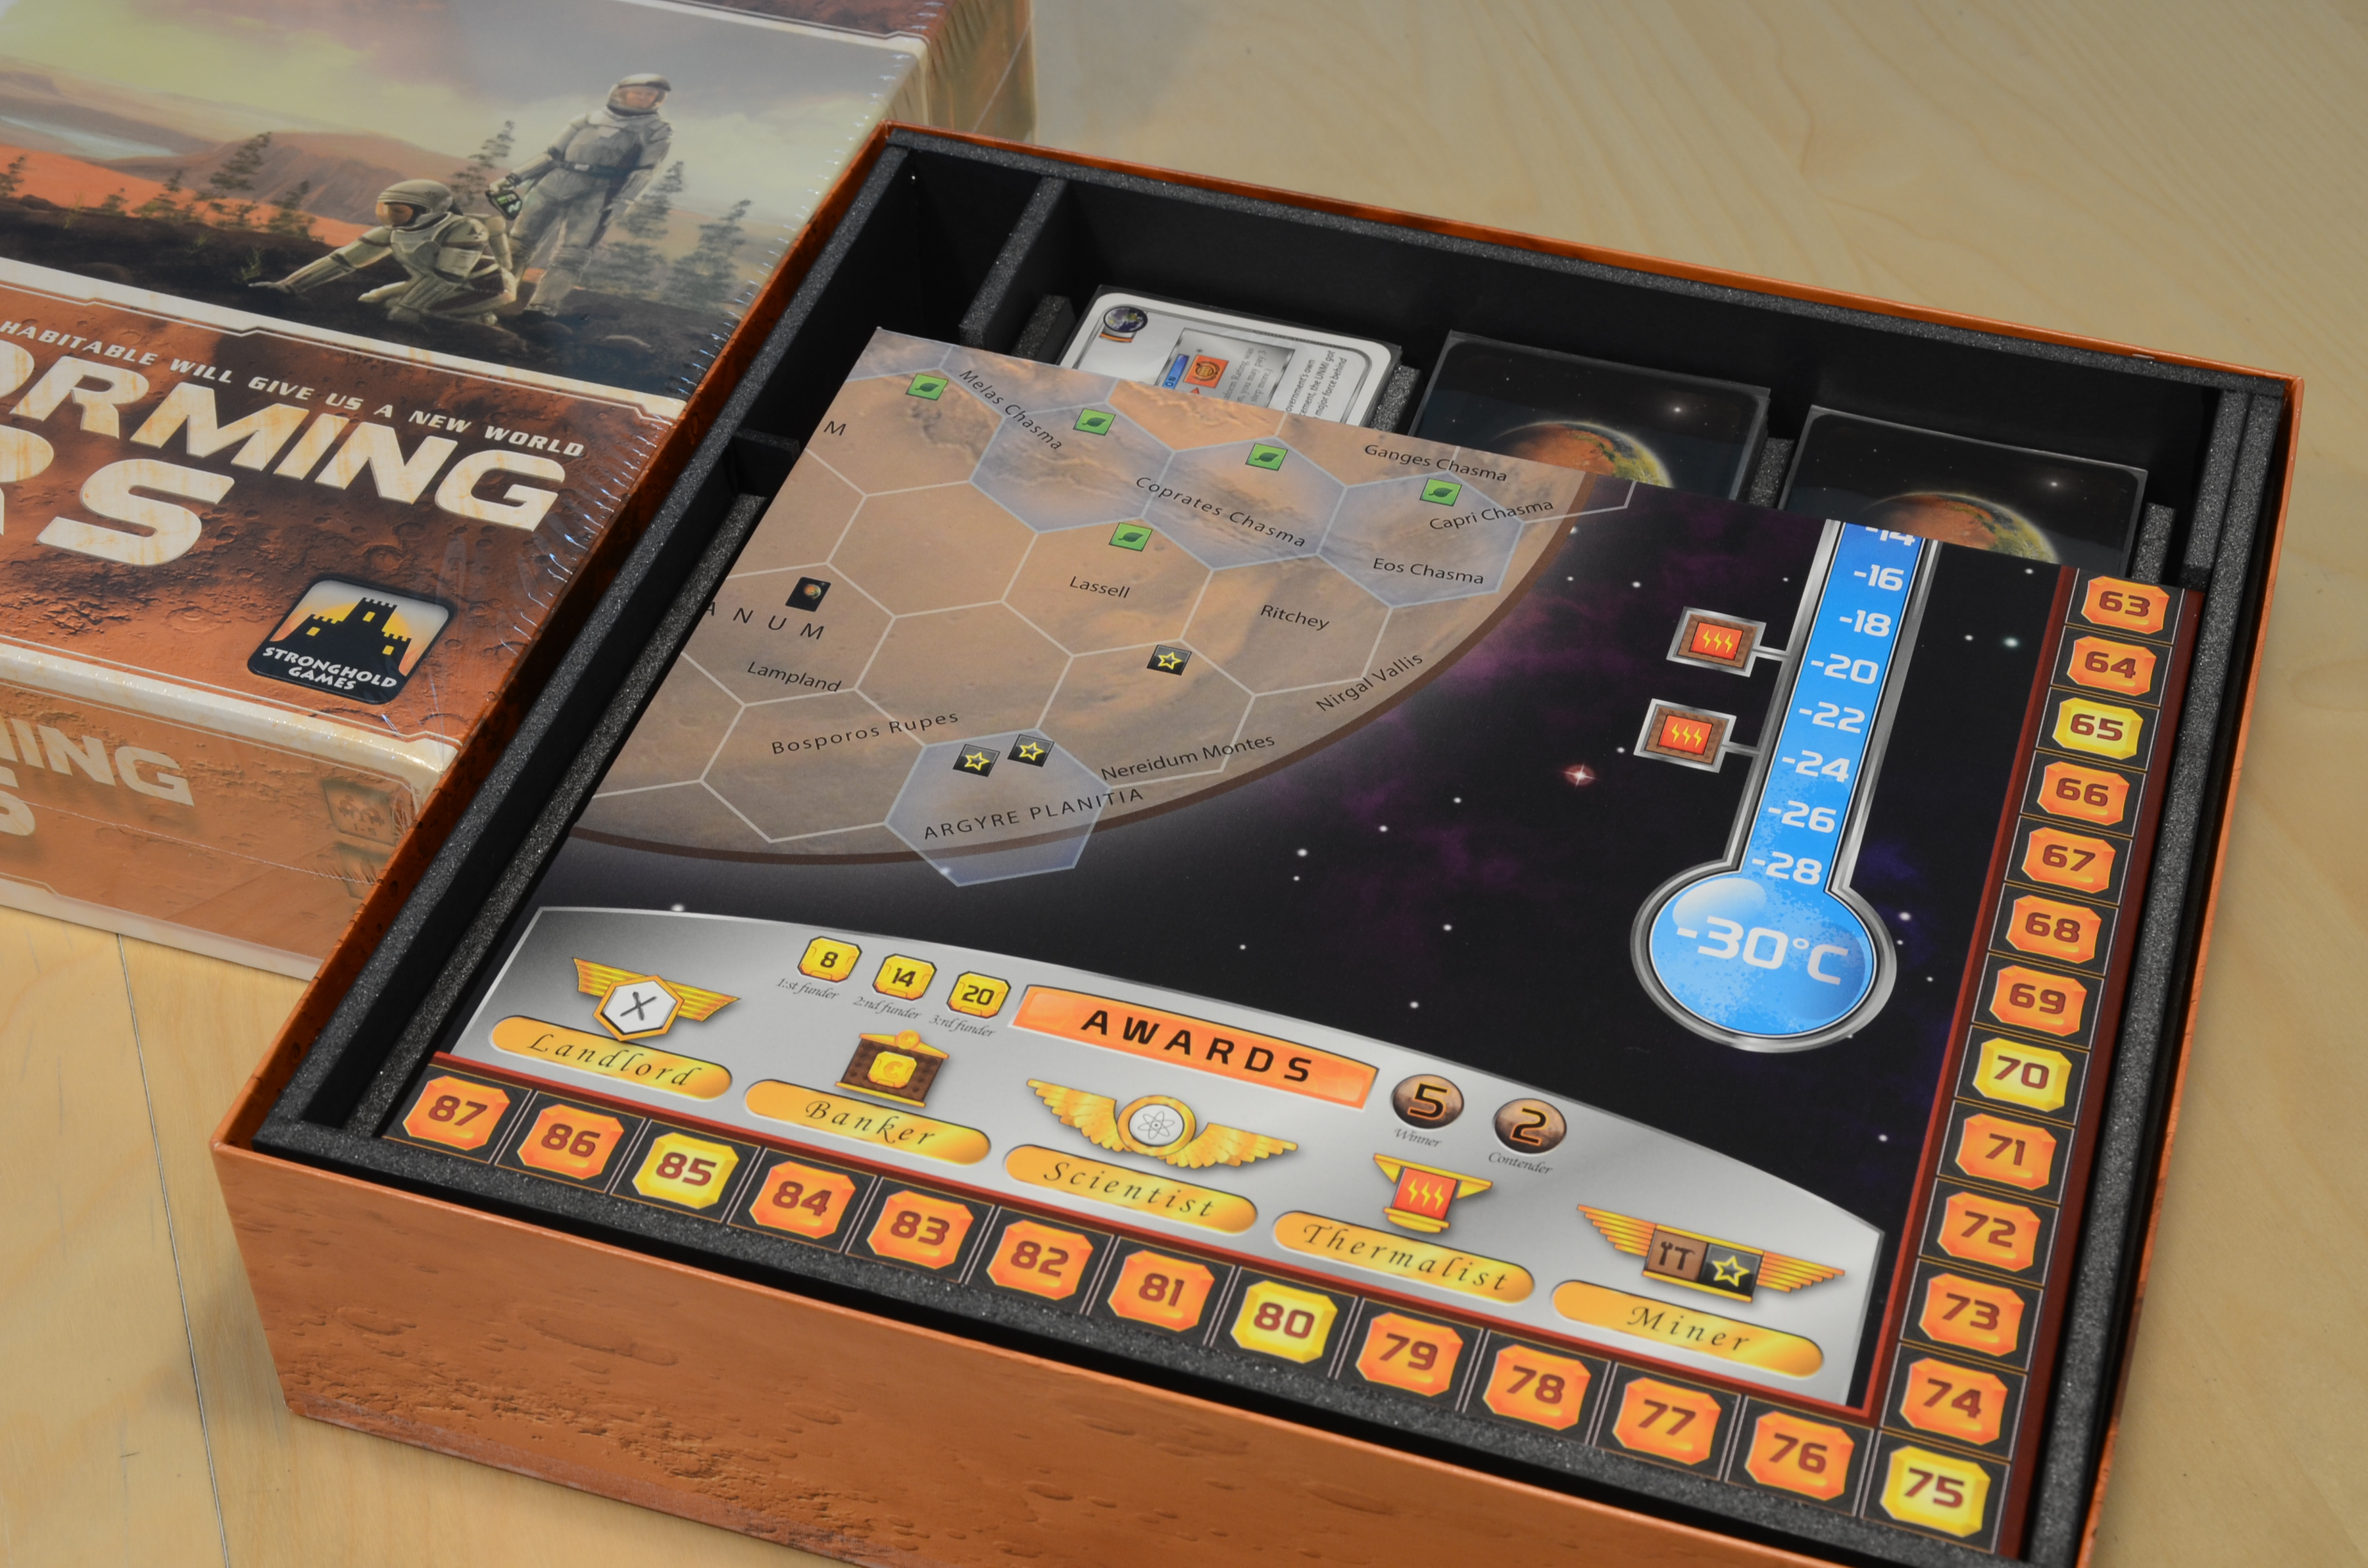 Terraforming Mars火星開發計畫 風扣板桌遊收納盒